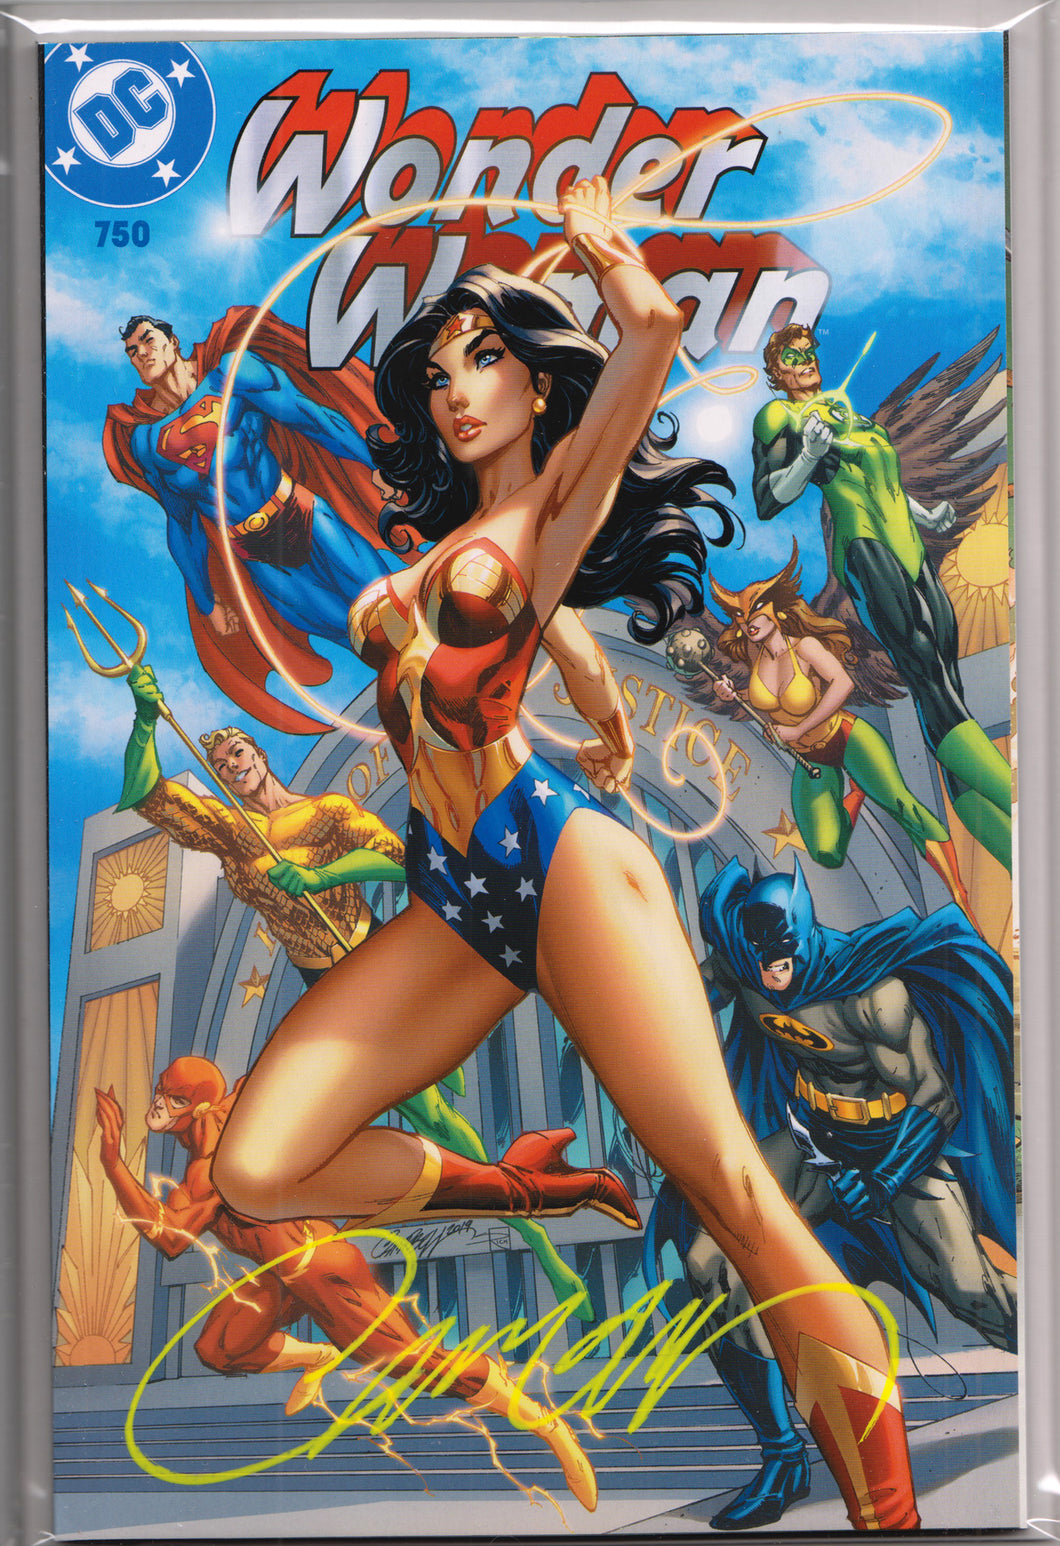 WONDER WOMAN #750B (J. SCOTT CAMPBELL SIGNED/EXCLUSIVE COVER) ~ DC Comics